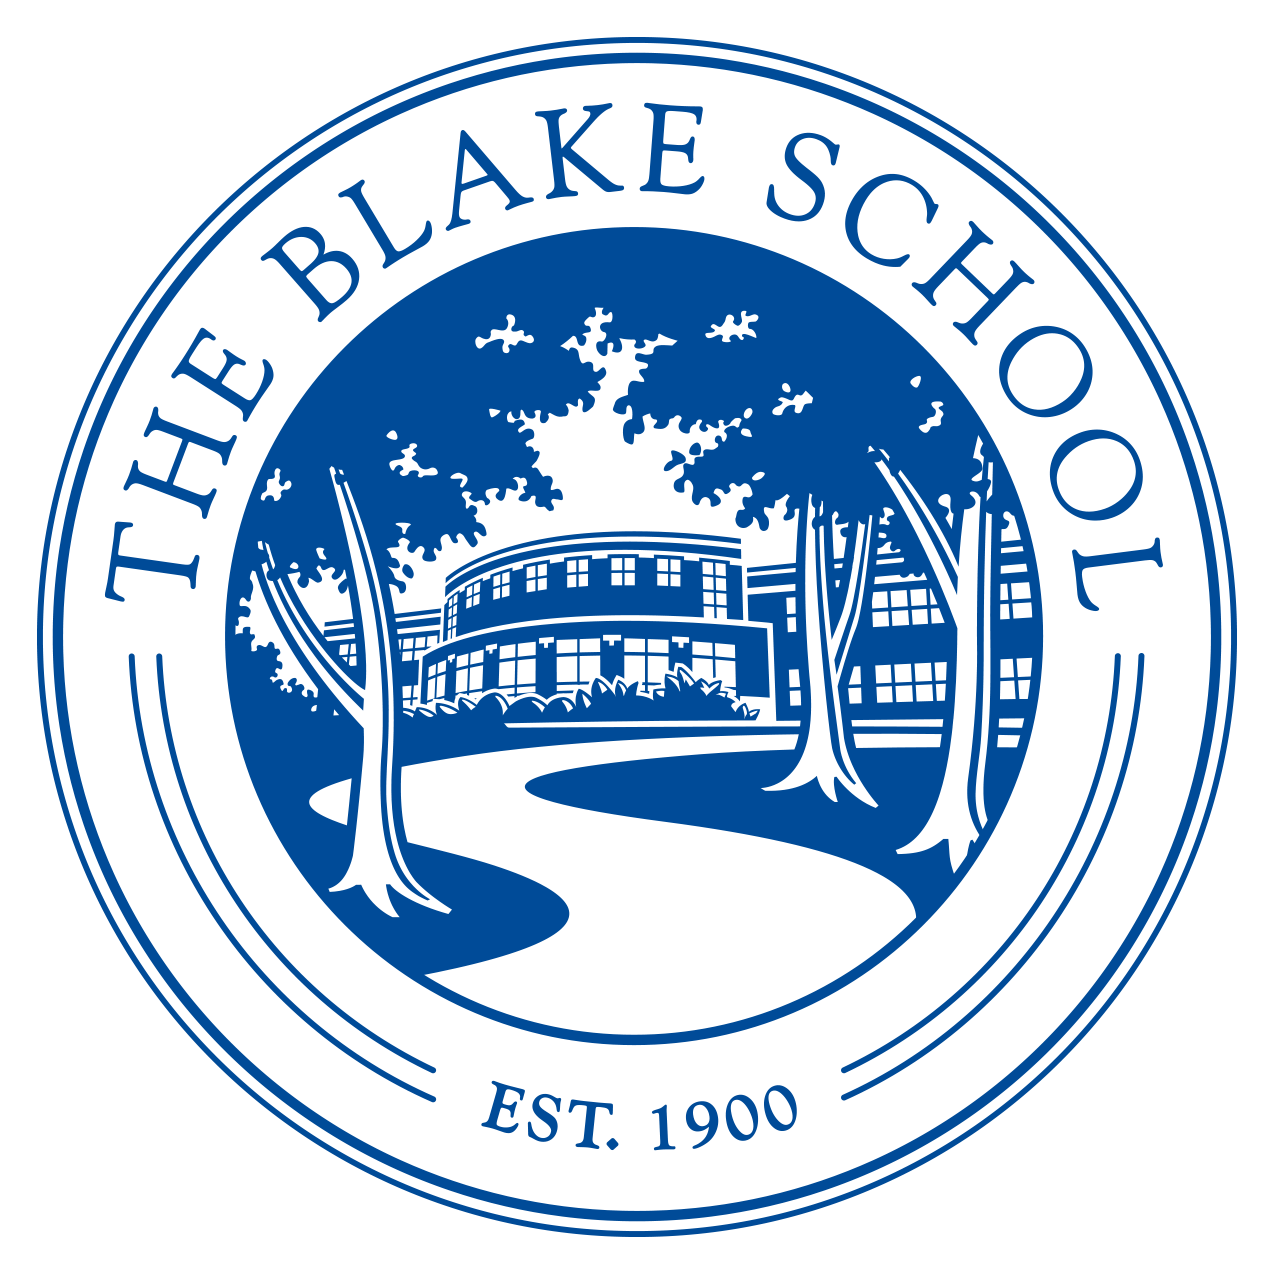 The Blake School